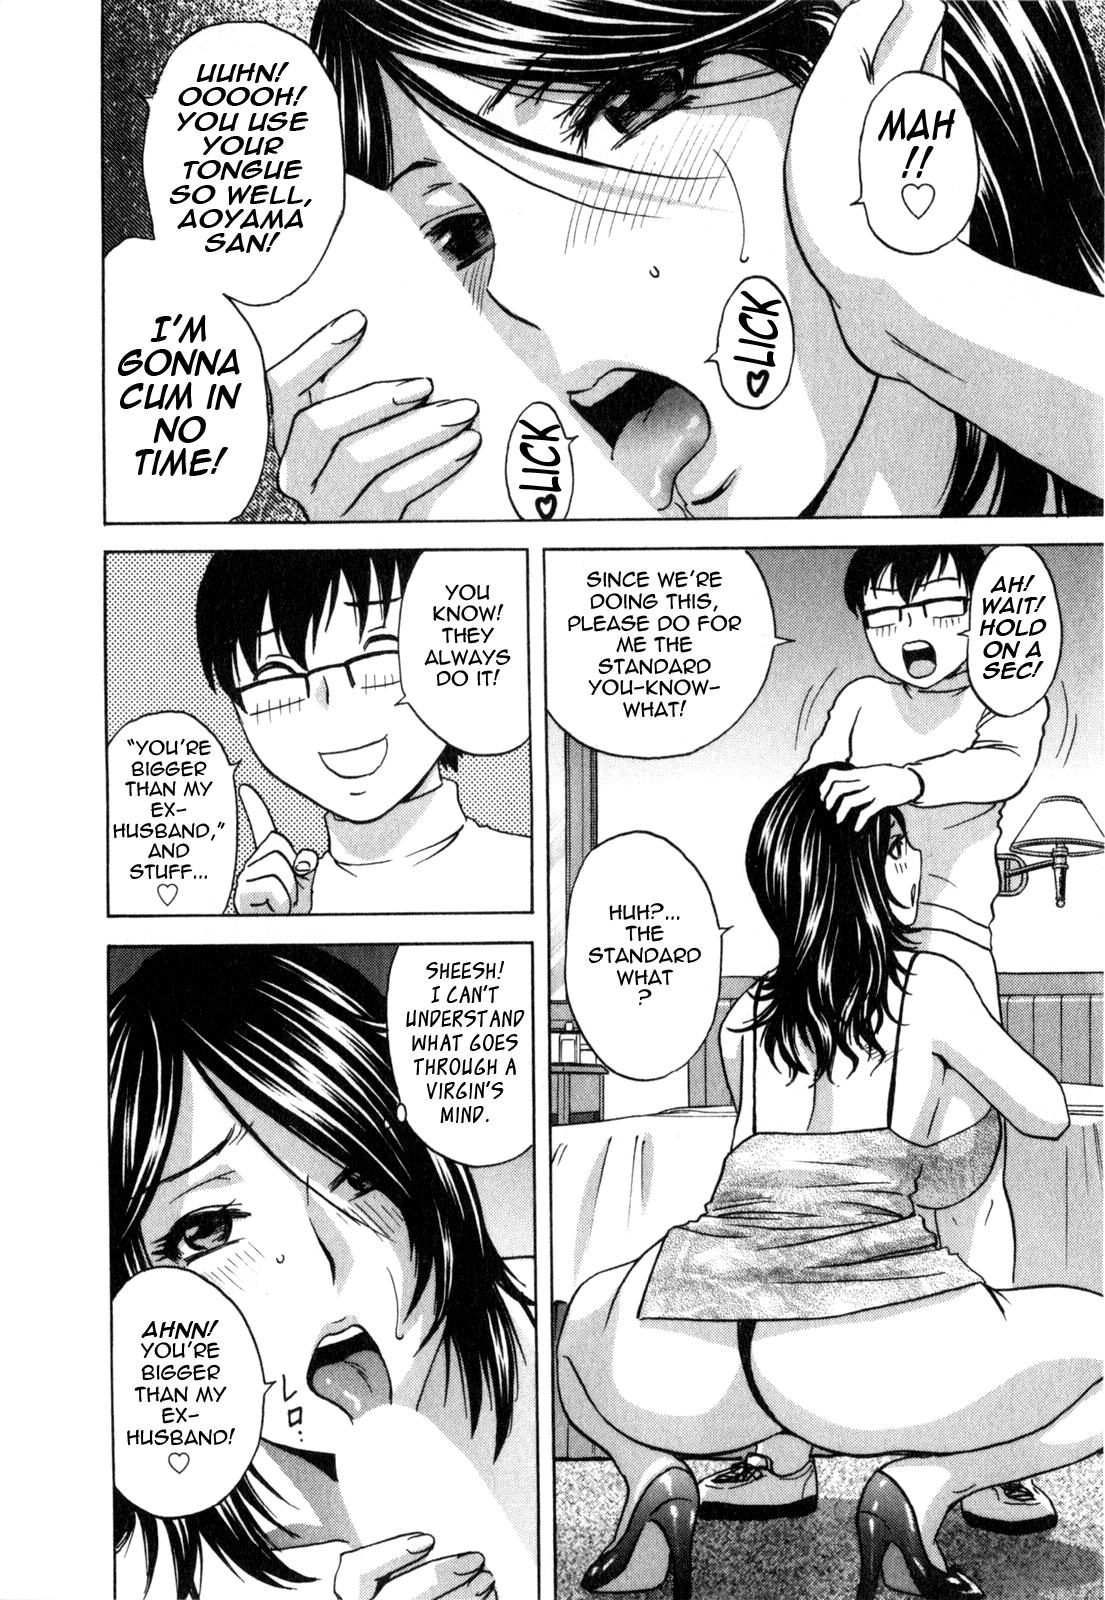 [Hidemaru] Life with Married Women Just Like a Manga 3 - Ch. 1-5 [English] {Tadanohito} 55